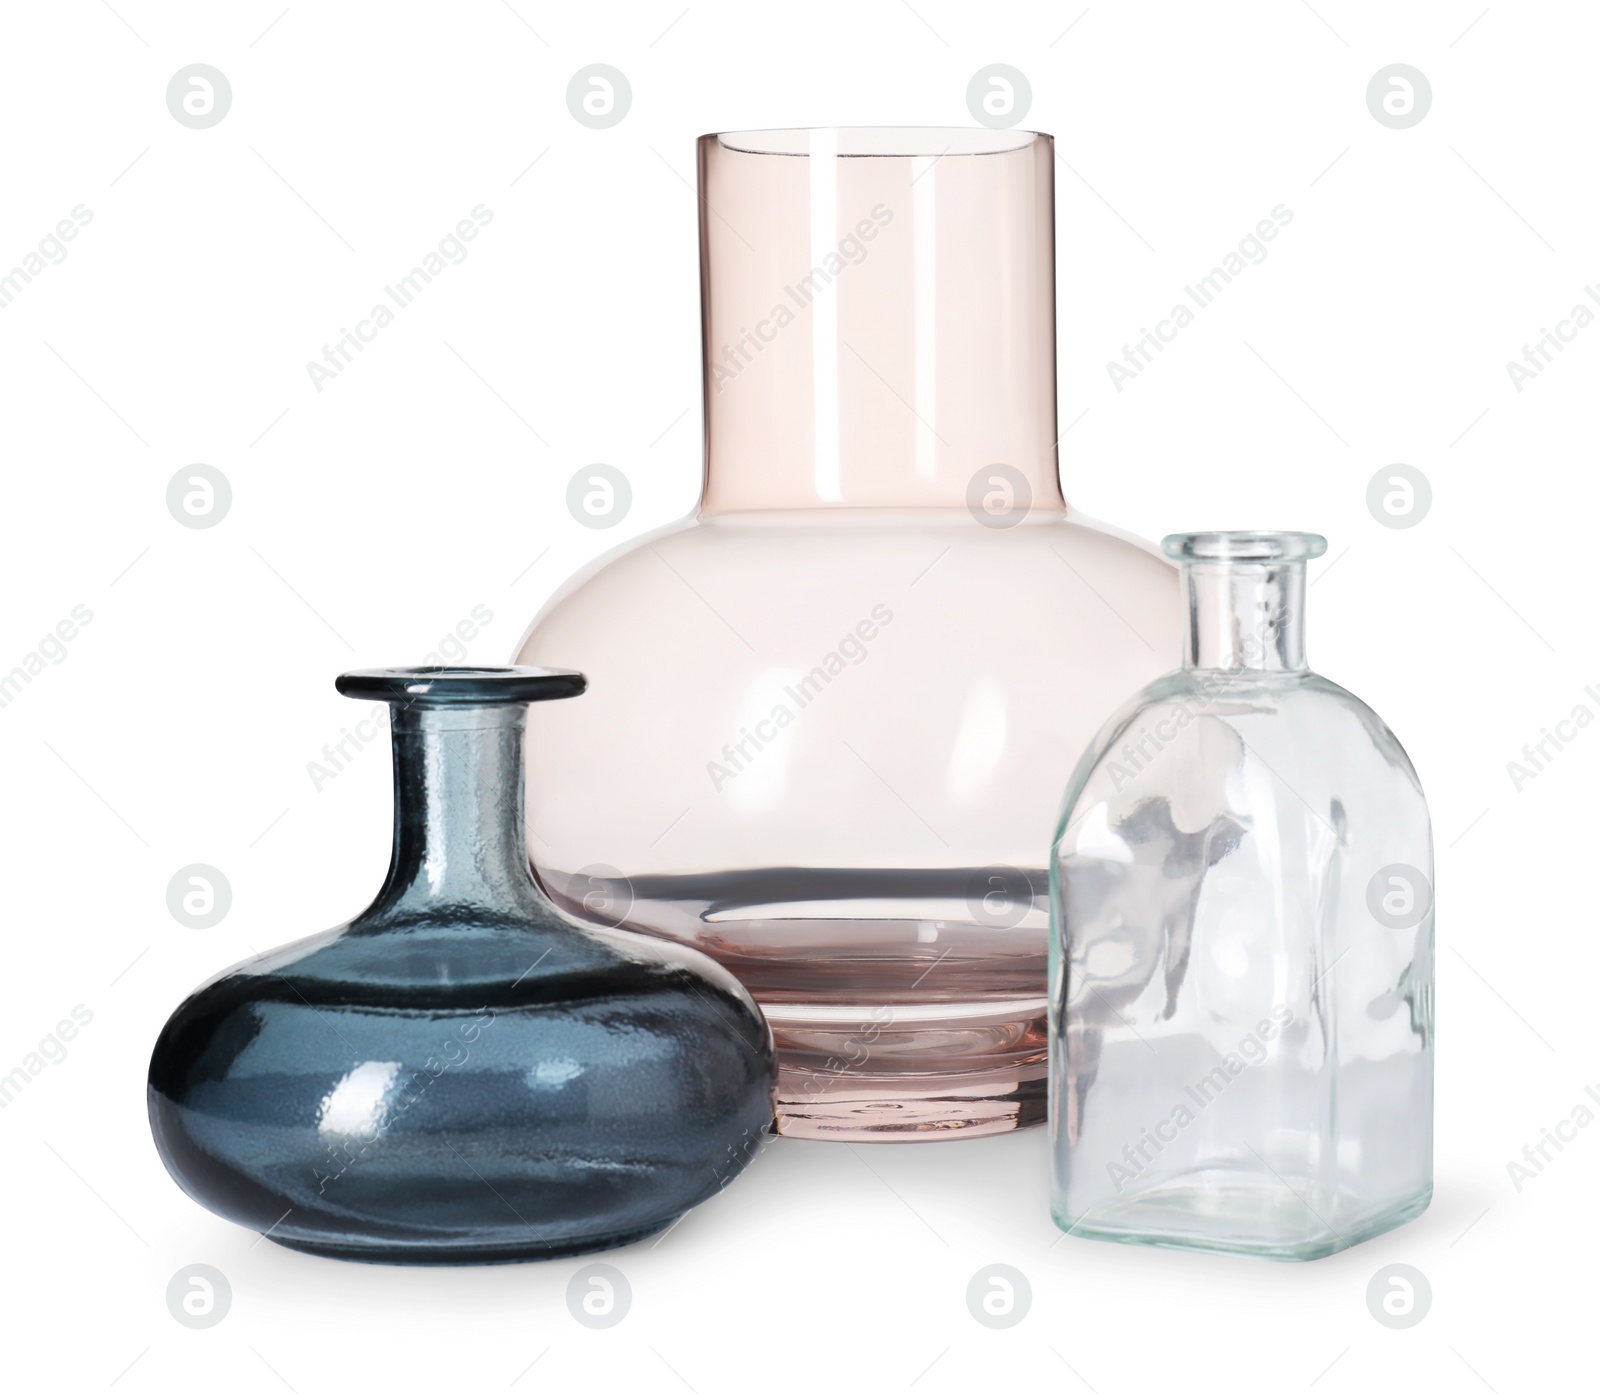 Photo of Many different stylish vases isolated on white